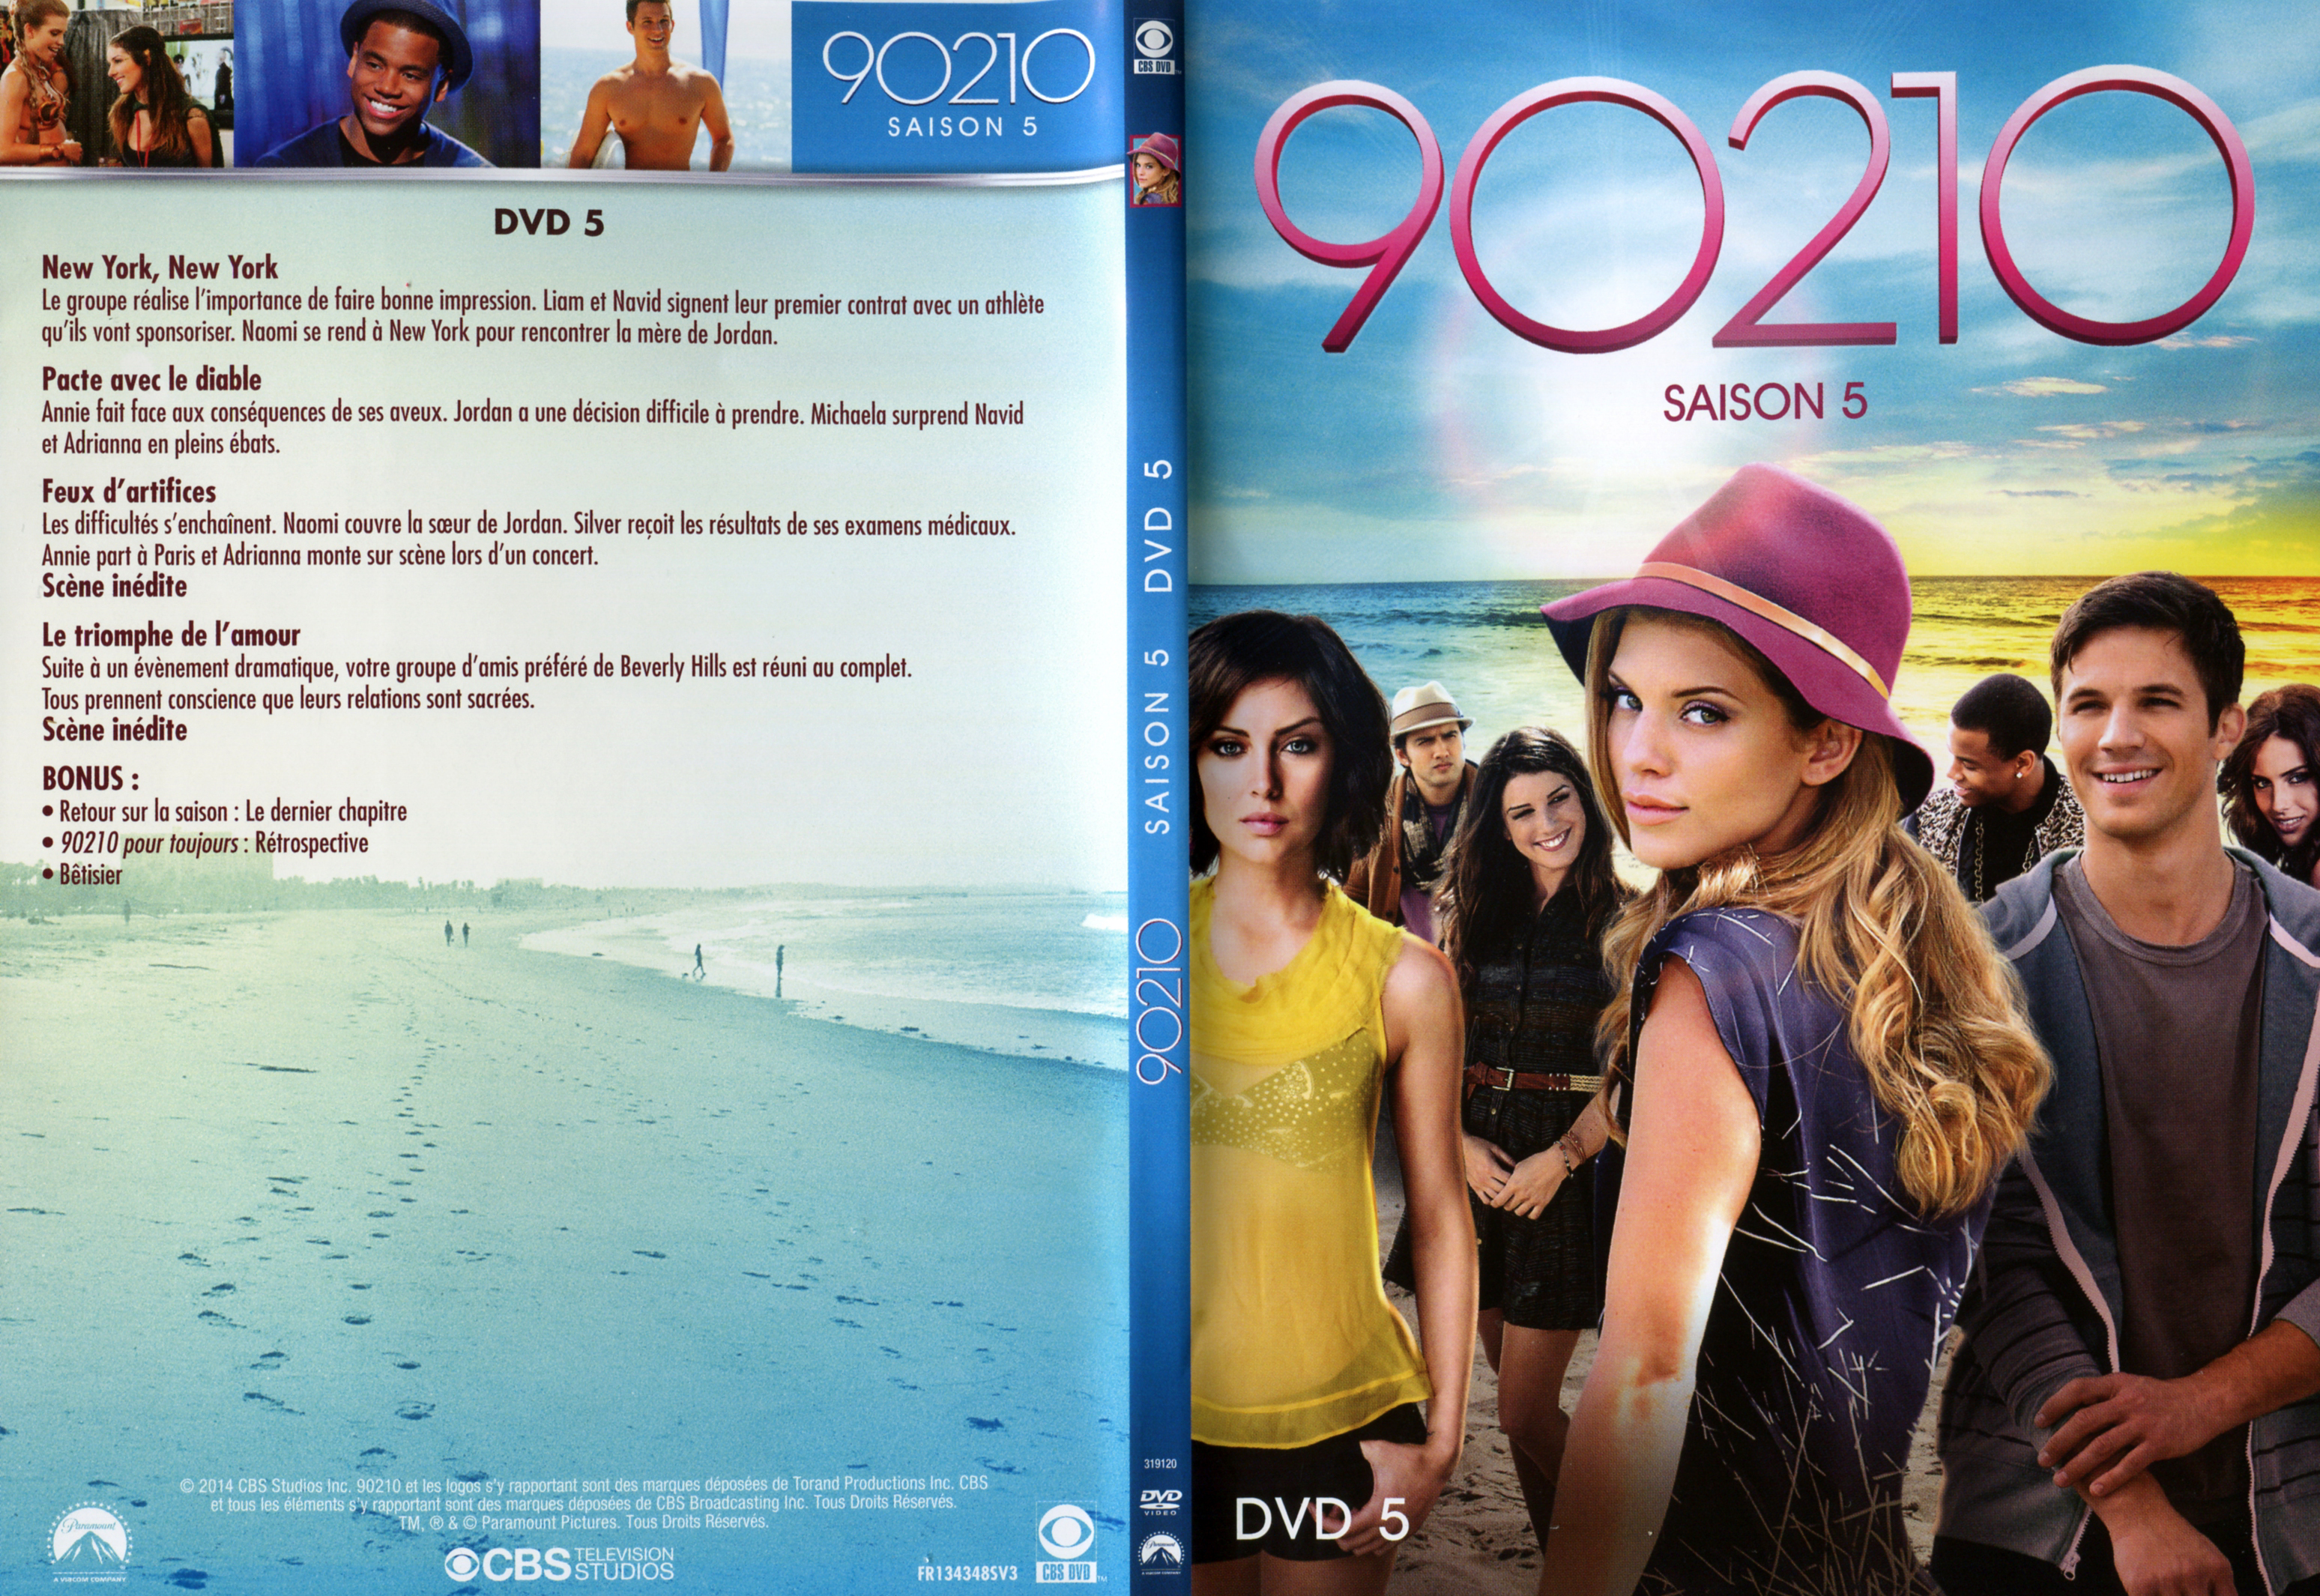 Jaquette DVD 90210 Saison 5 DVD 3